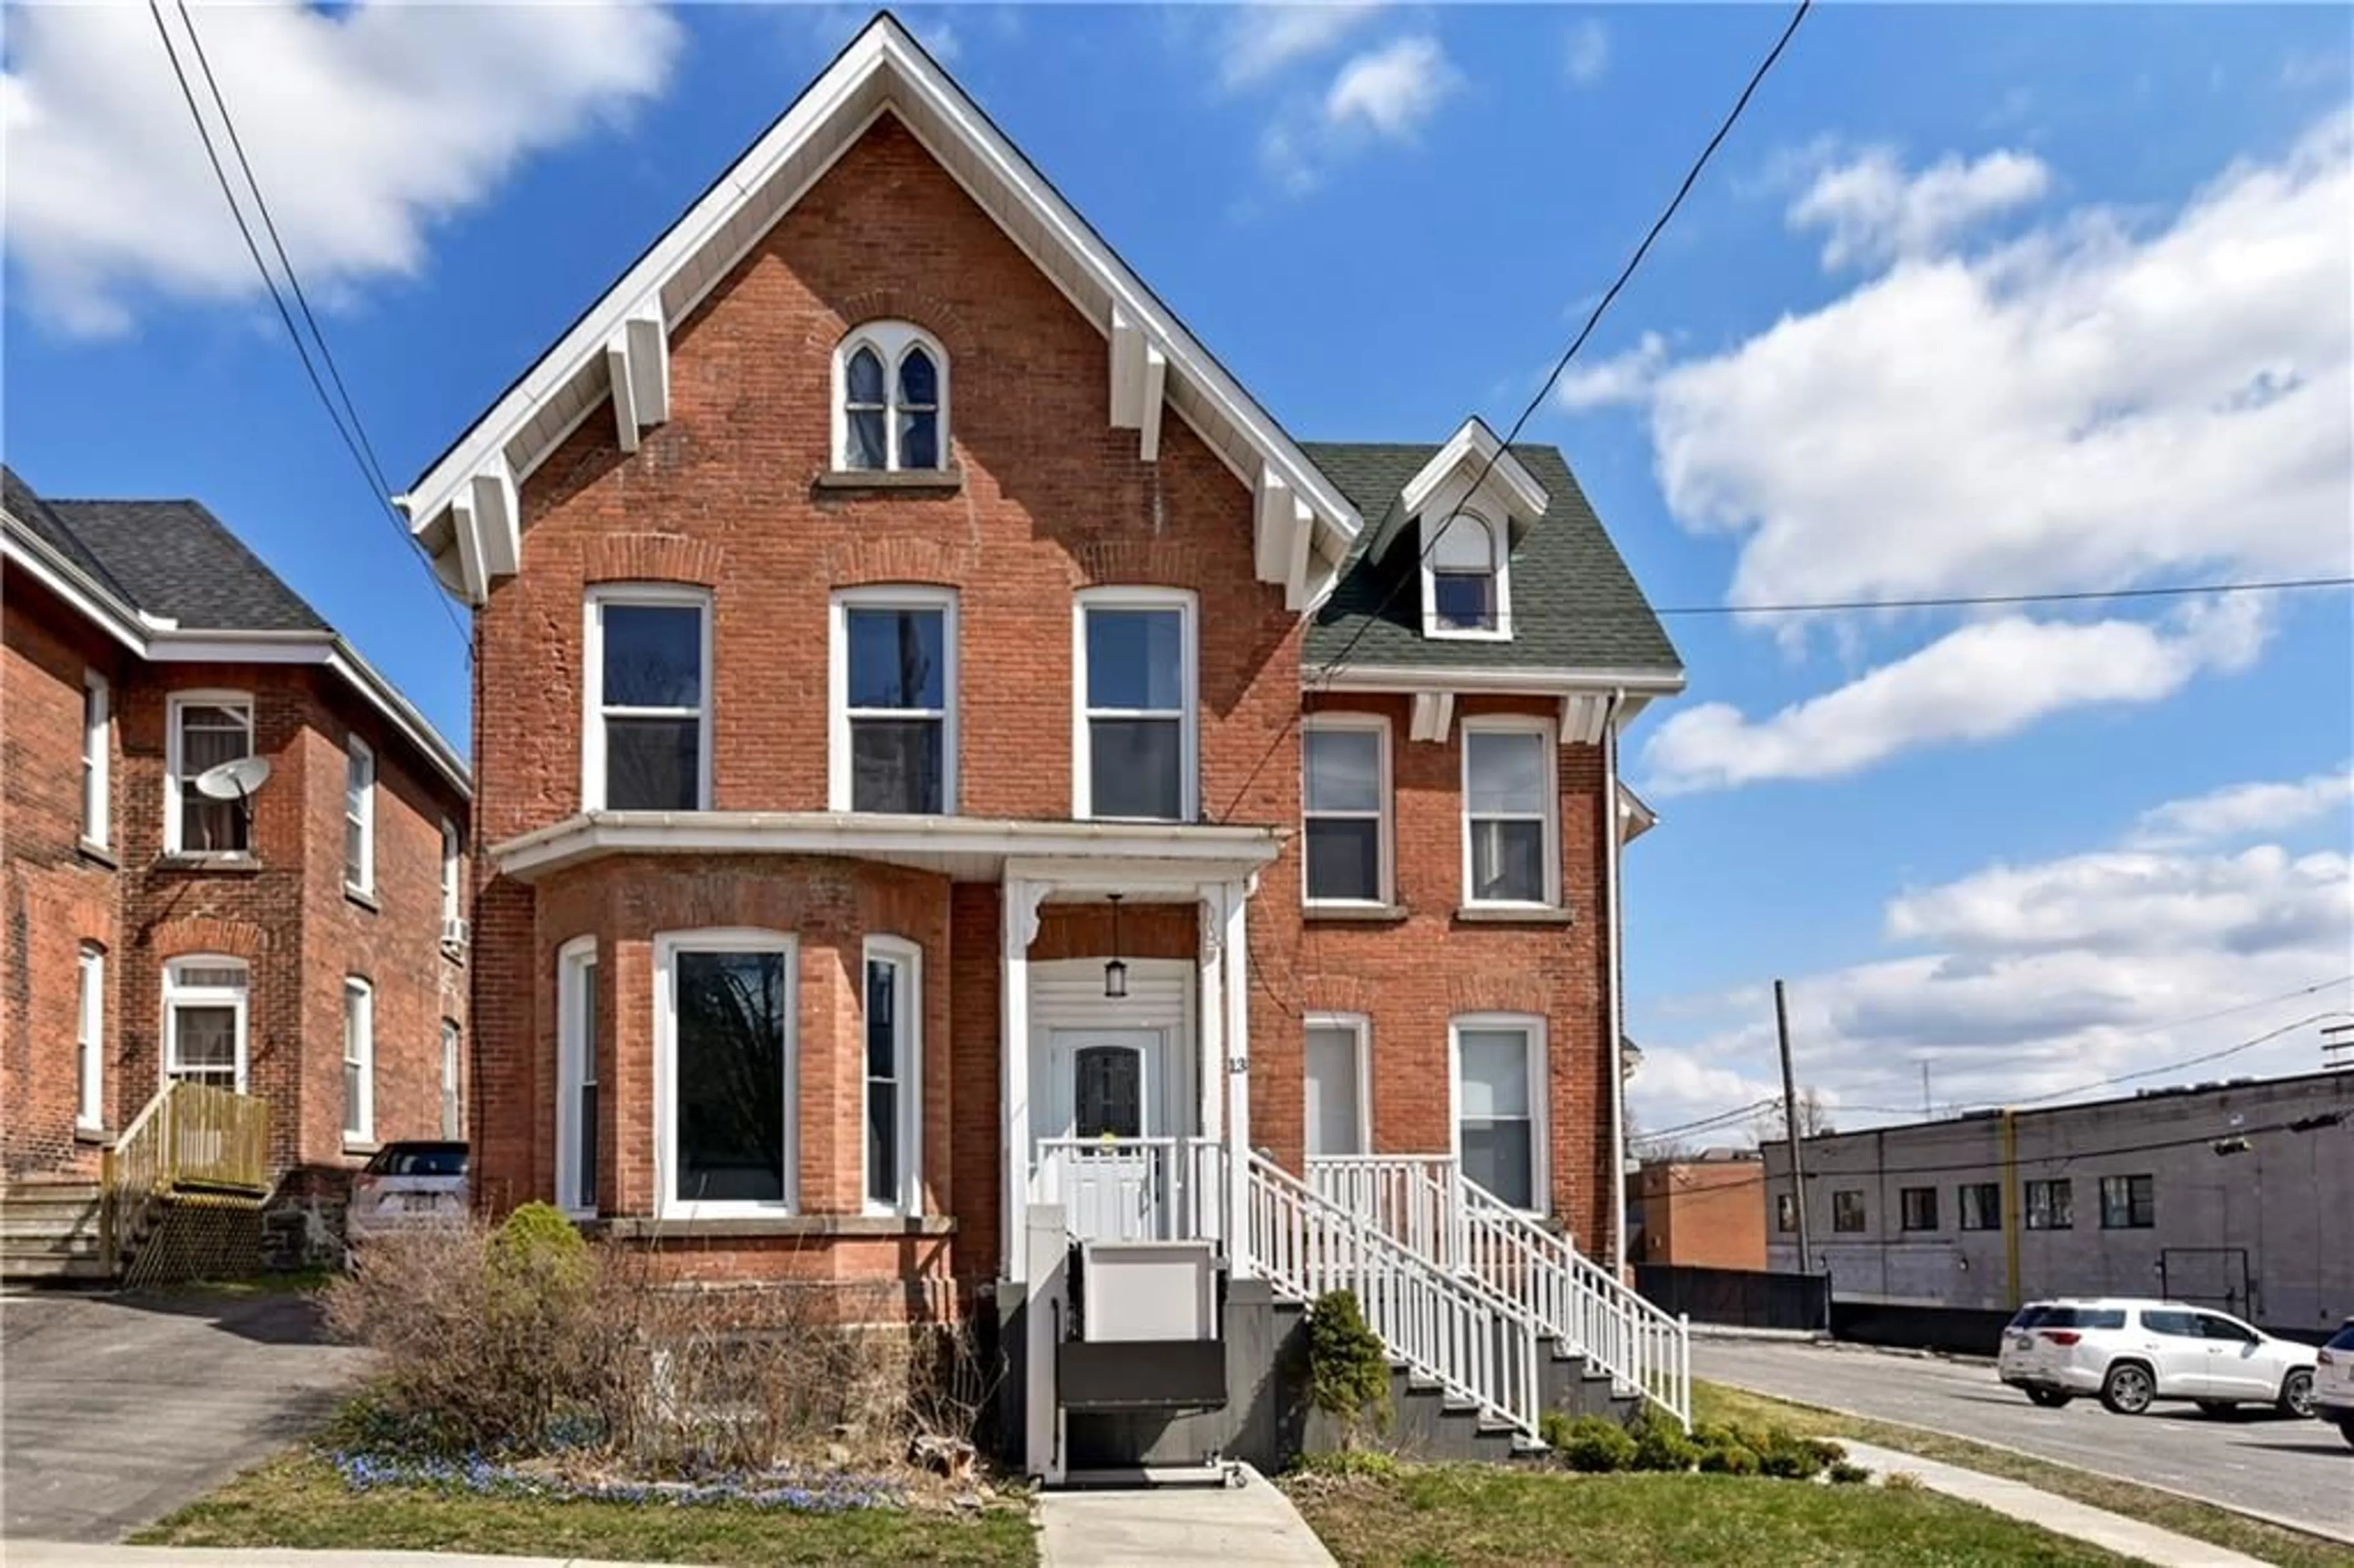 Home with brick exterior material for 11-13 GARDEN St, Brockville Ontario K6V 2B8